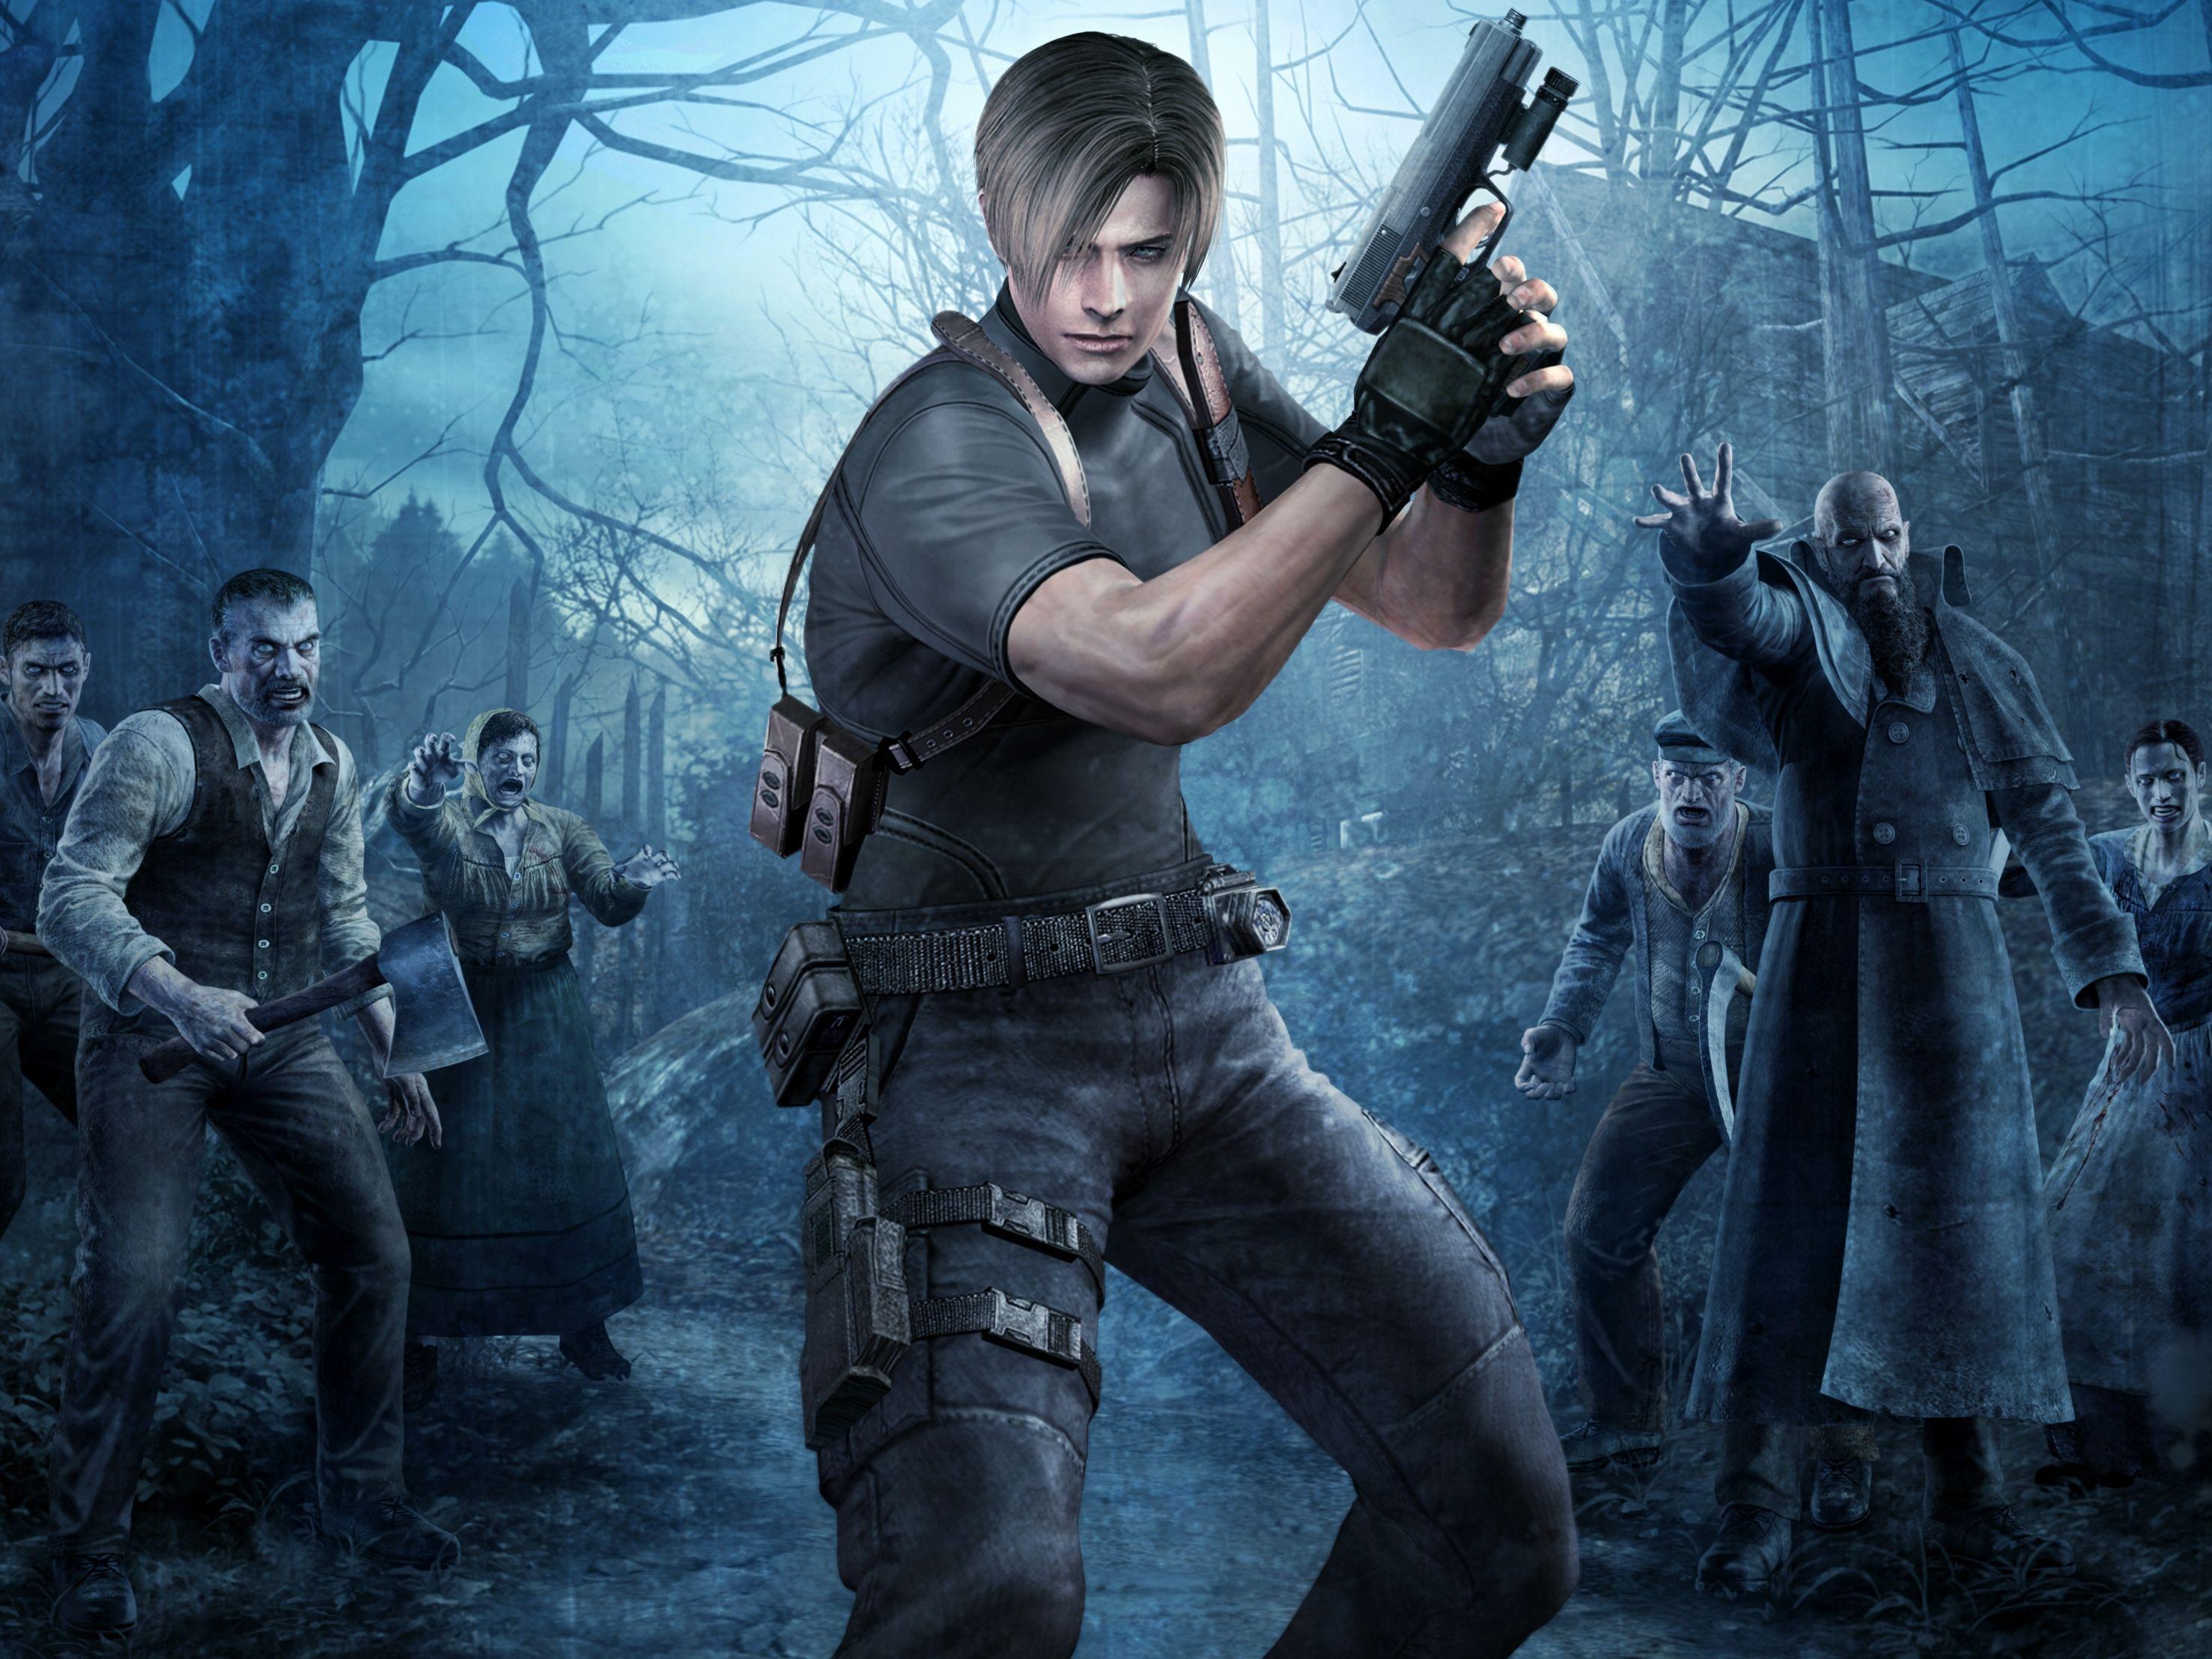 Resident Evil 4 Wallpaper: Leon and Ashley - Minitokyo